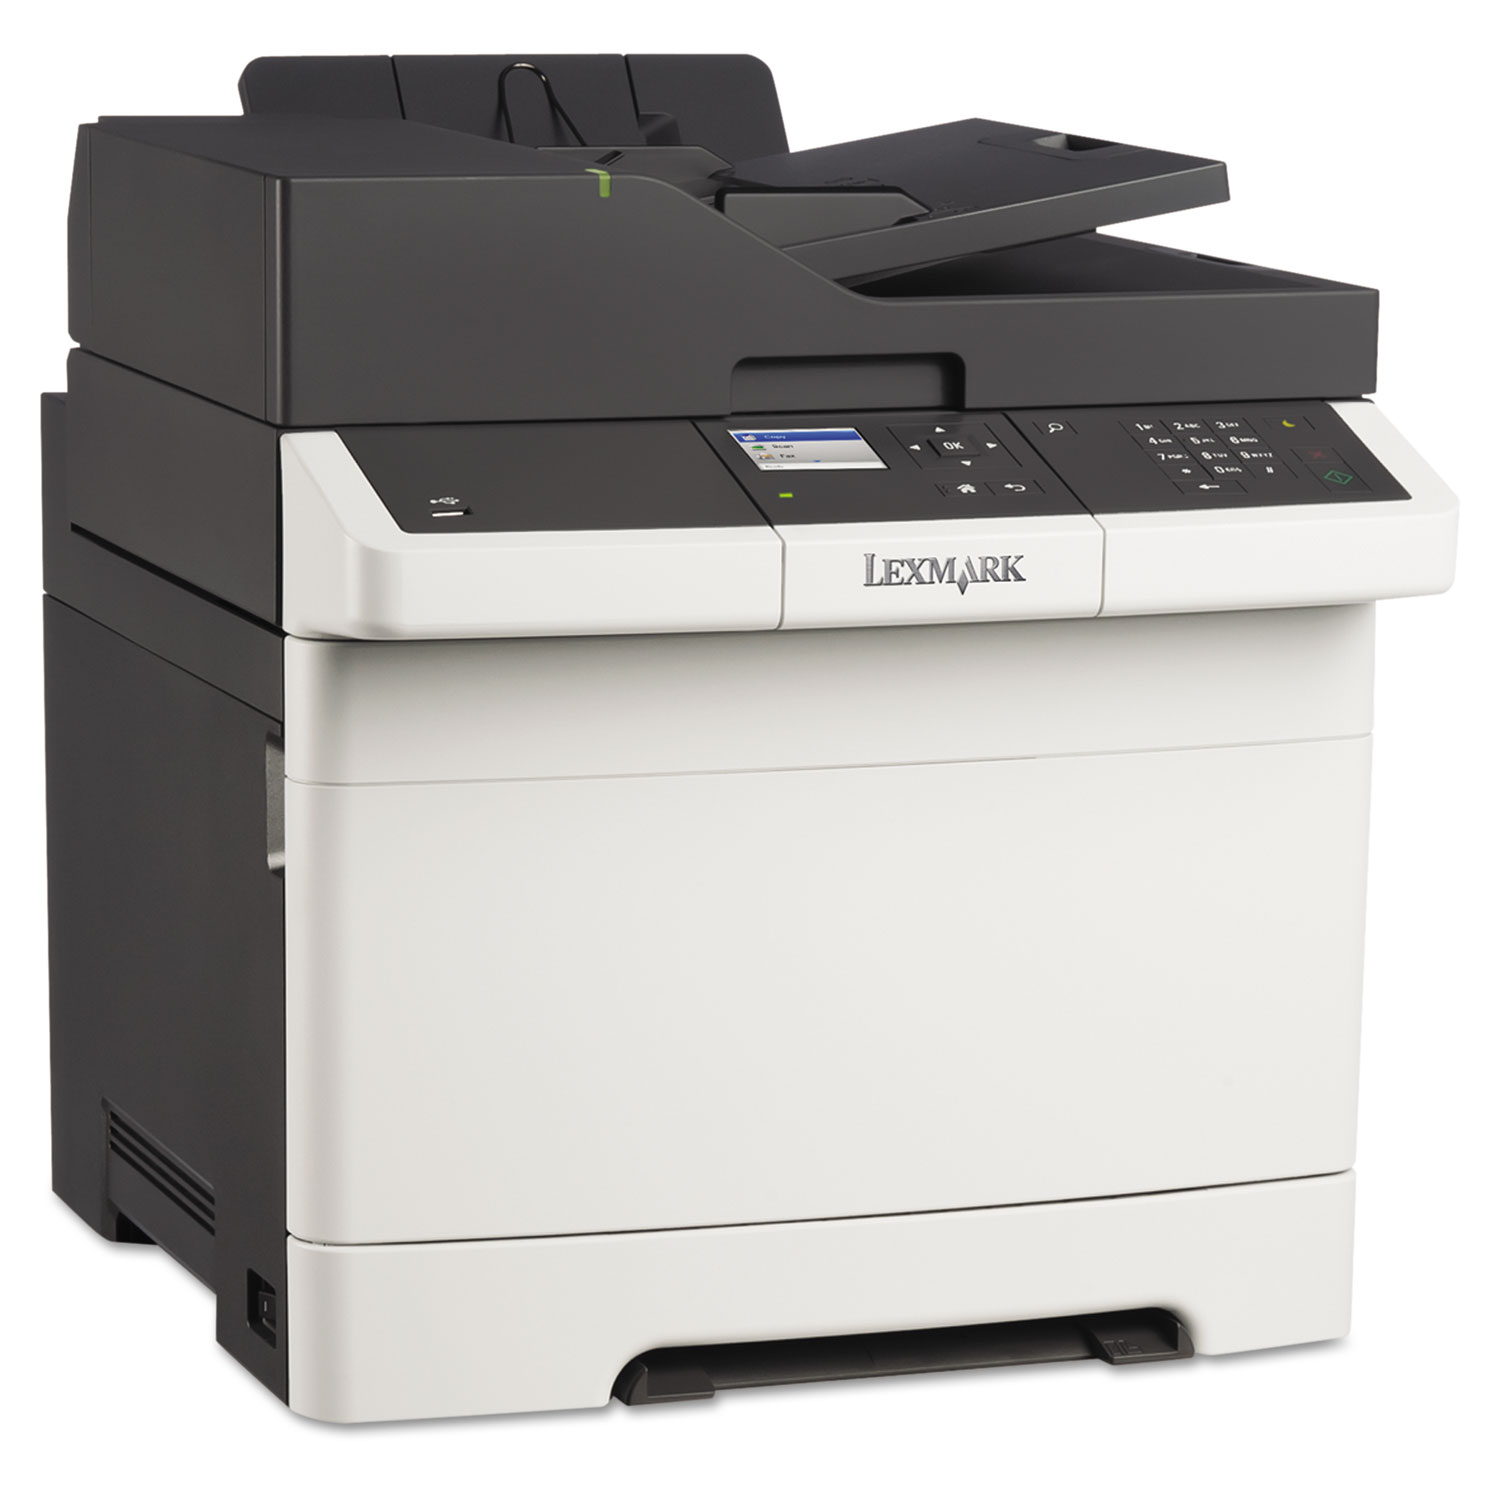 CX310n Multifunction Color Laser Printer, Copy/Print/Scan